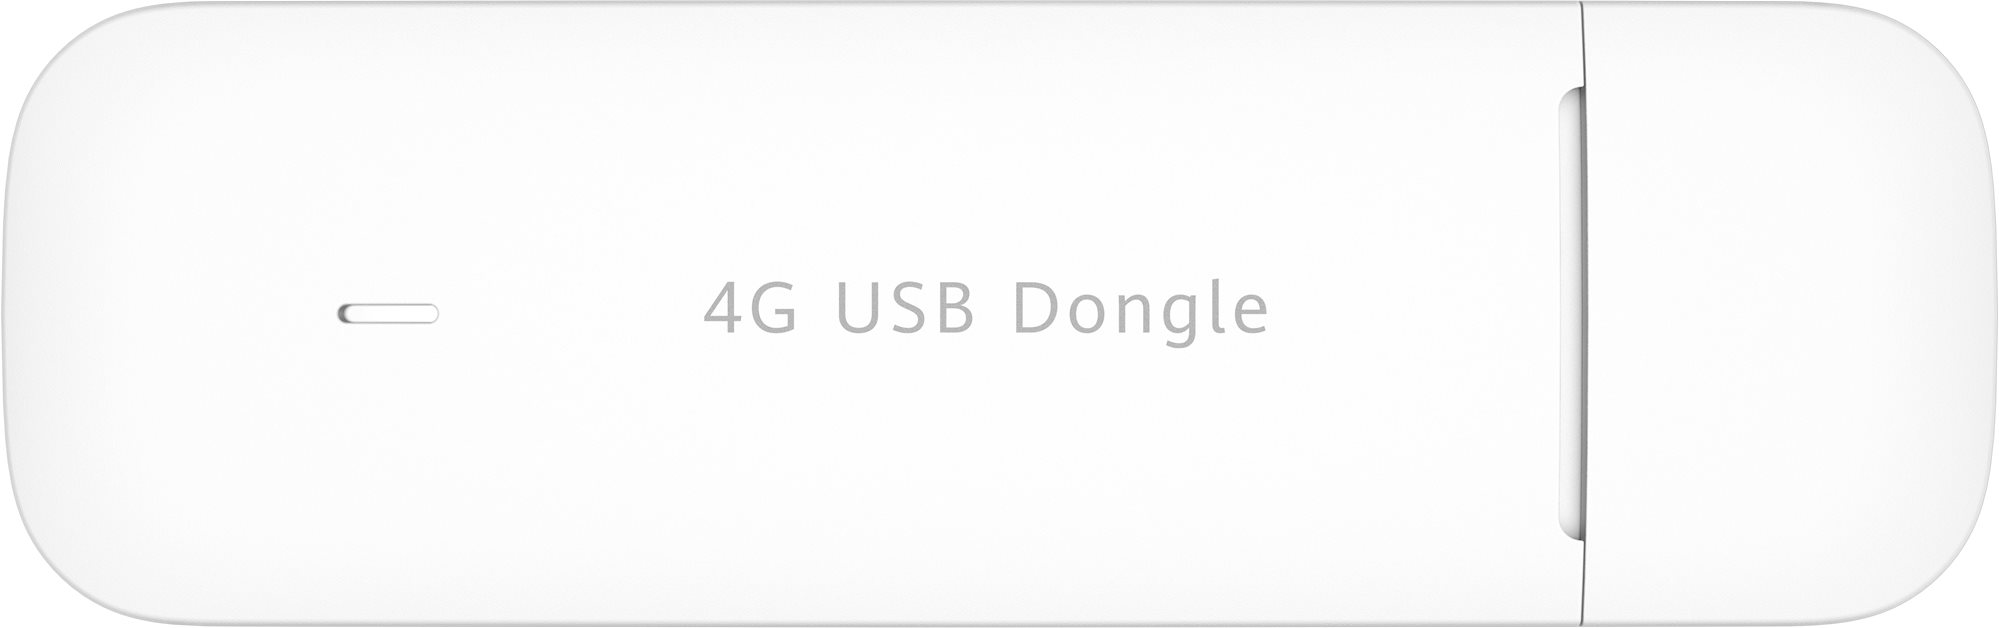 Brovi 4G USB Dongle (Powered by Huawei)